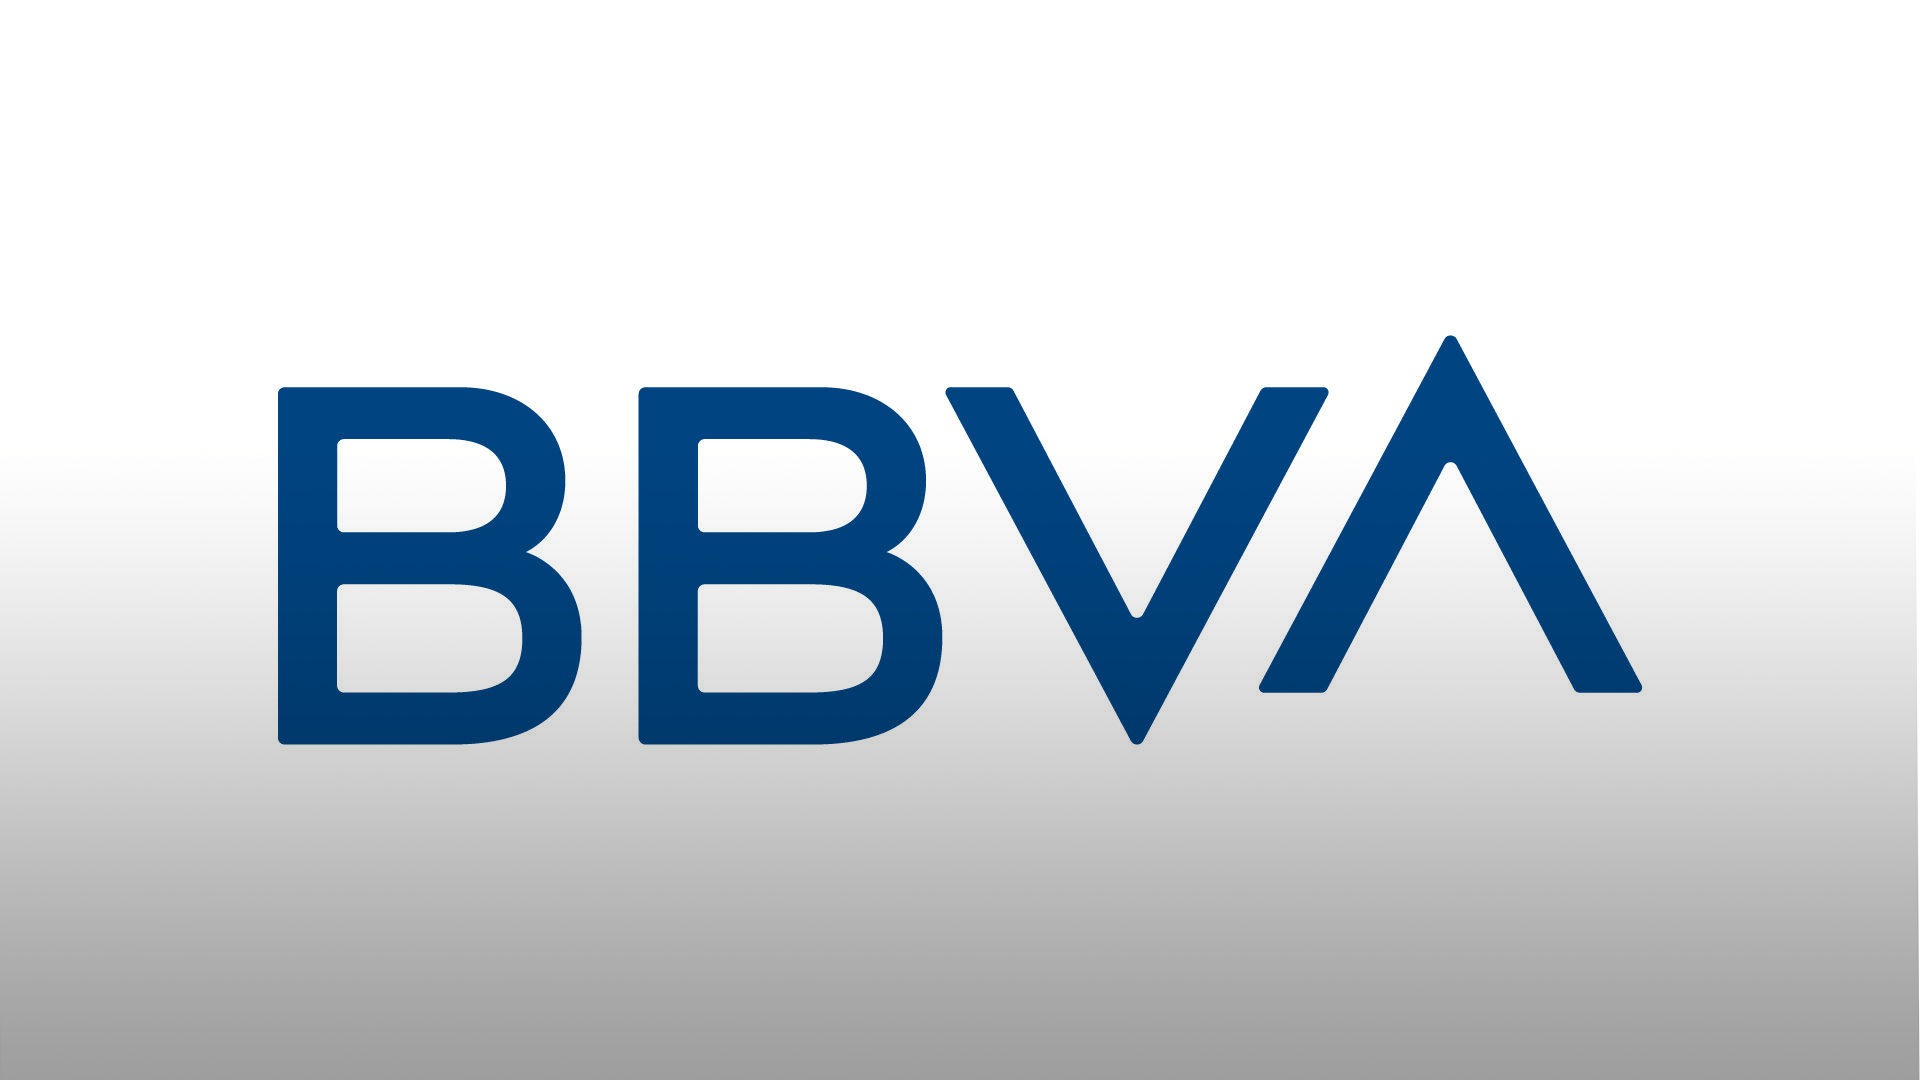 BBVA in Switzerland, a new global and digital brand